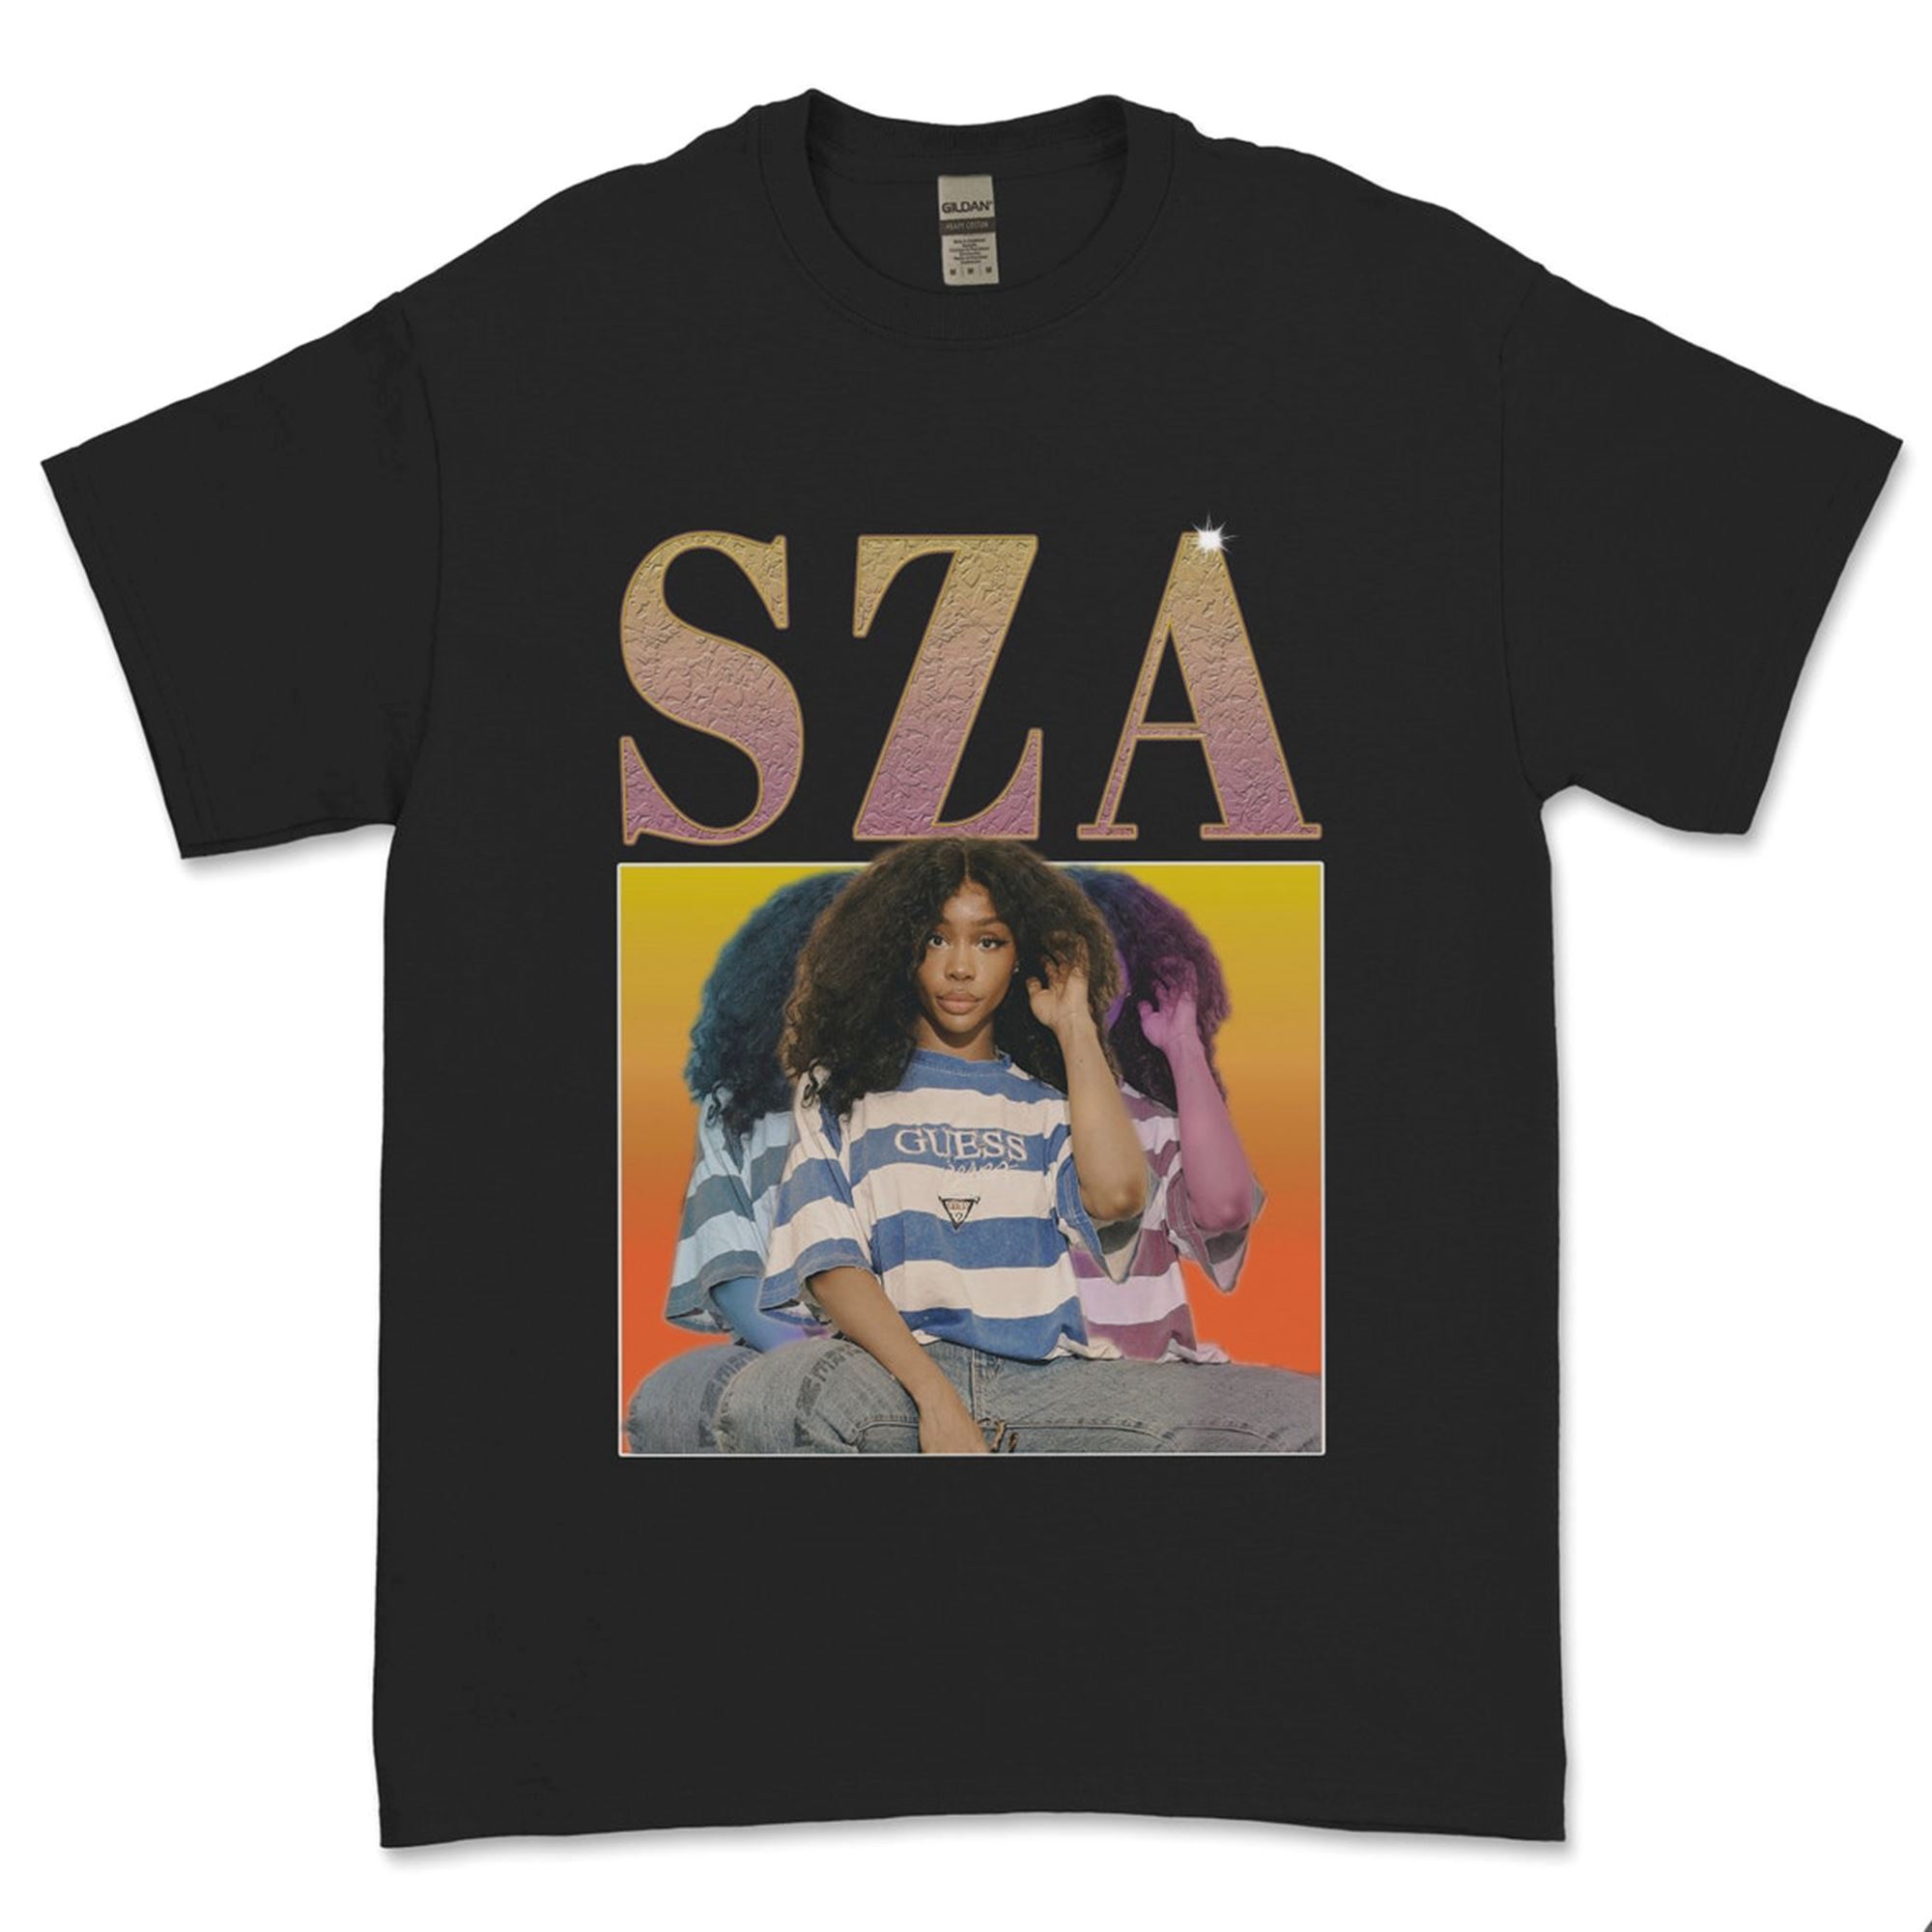 Sza - Good Days T Shirt For Men And Women Best Gift For Rap Lovers Unisex Hip Hop Shirt American Singer Tee